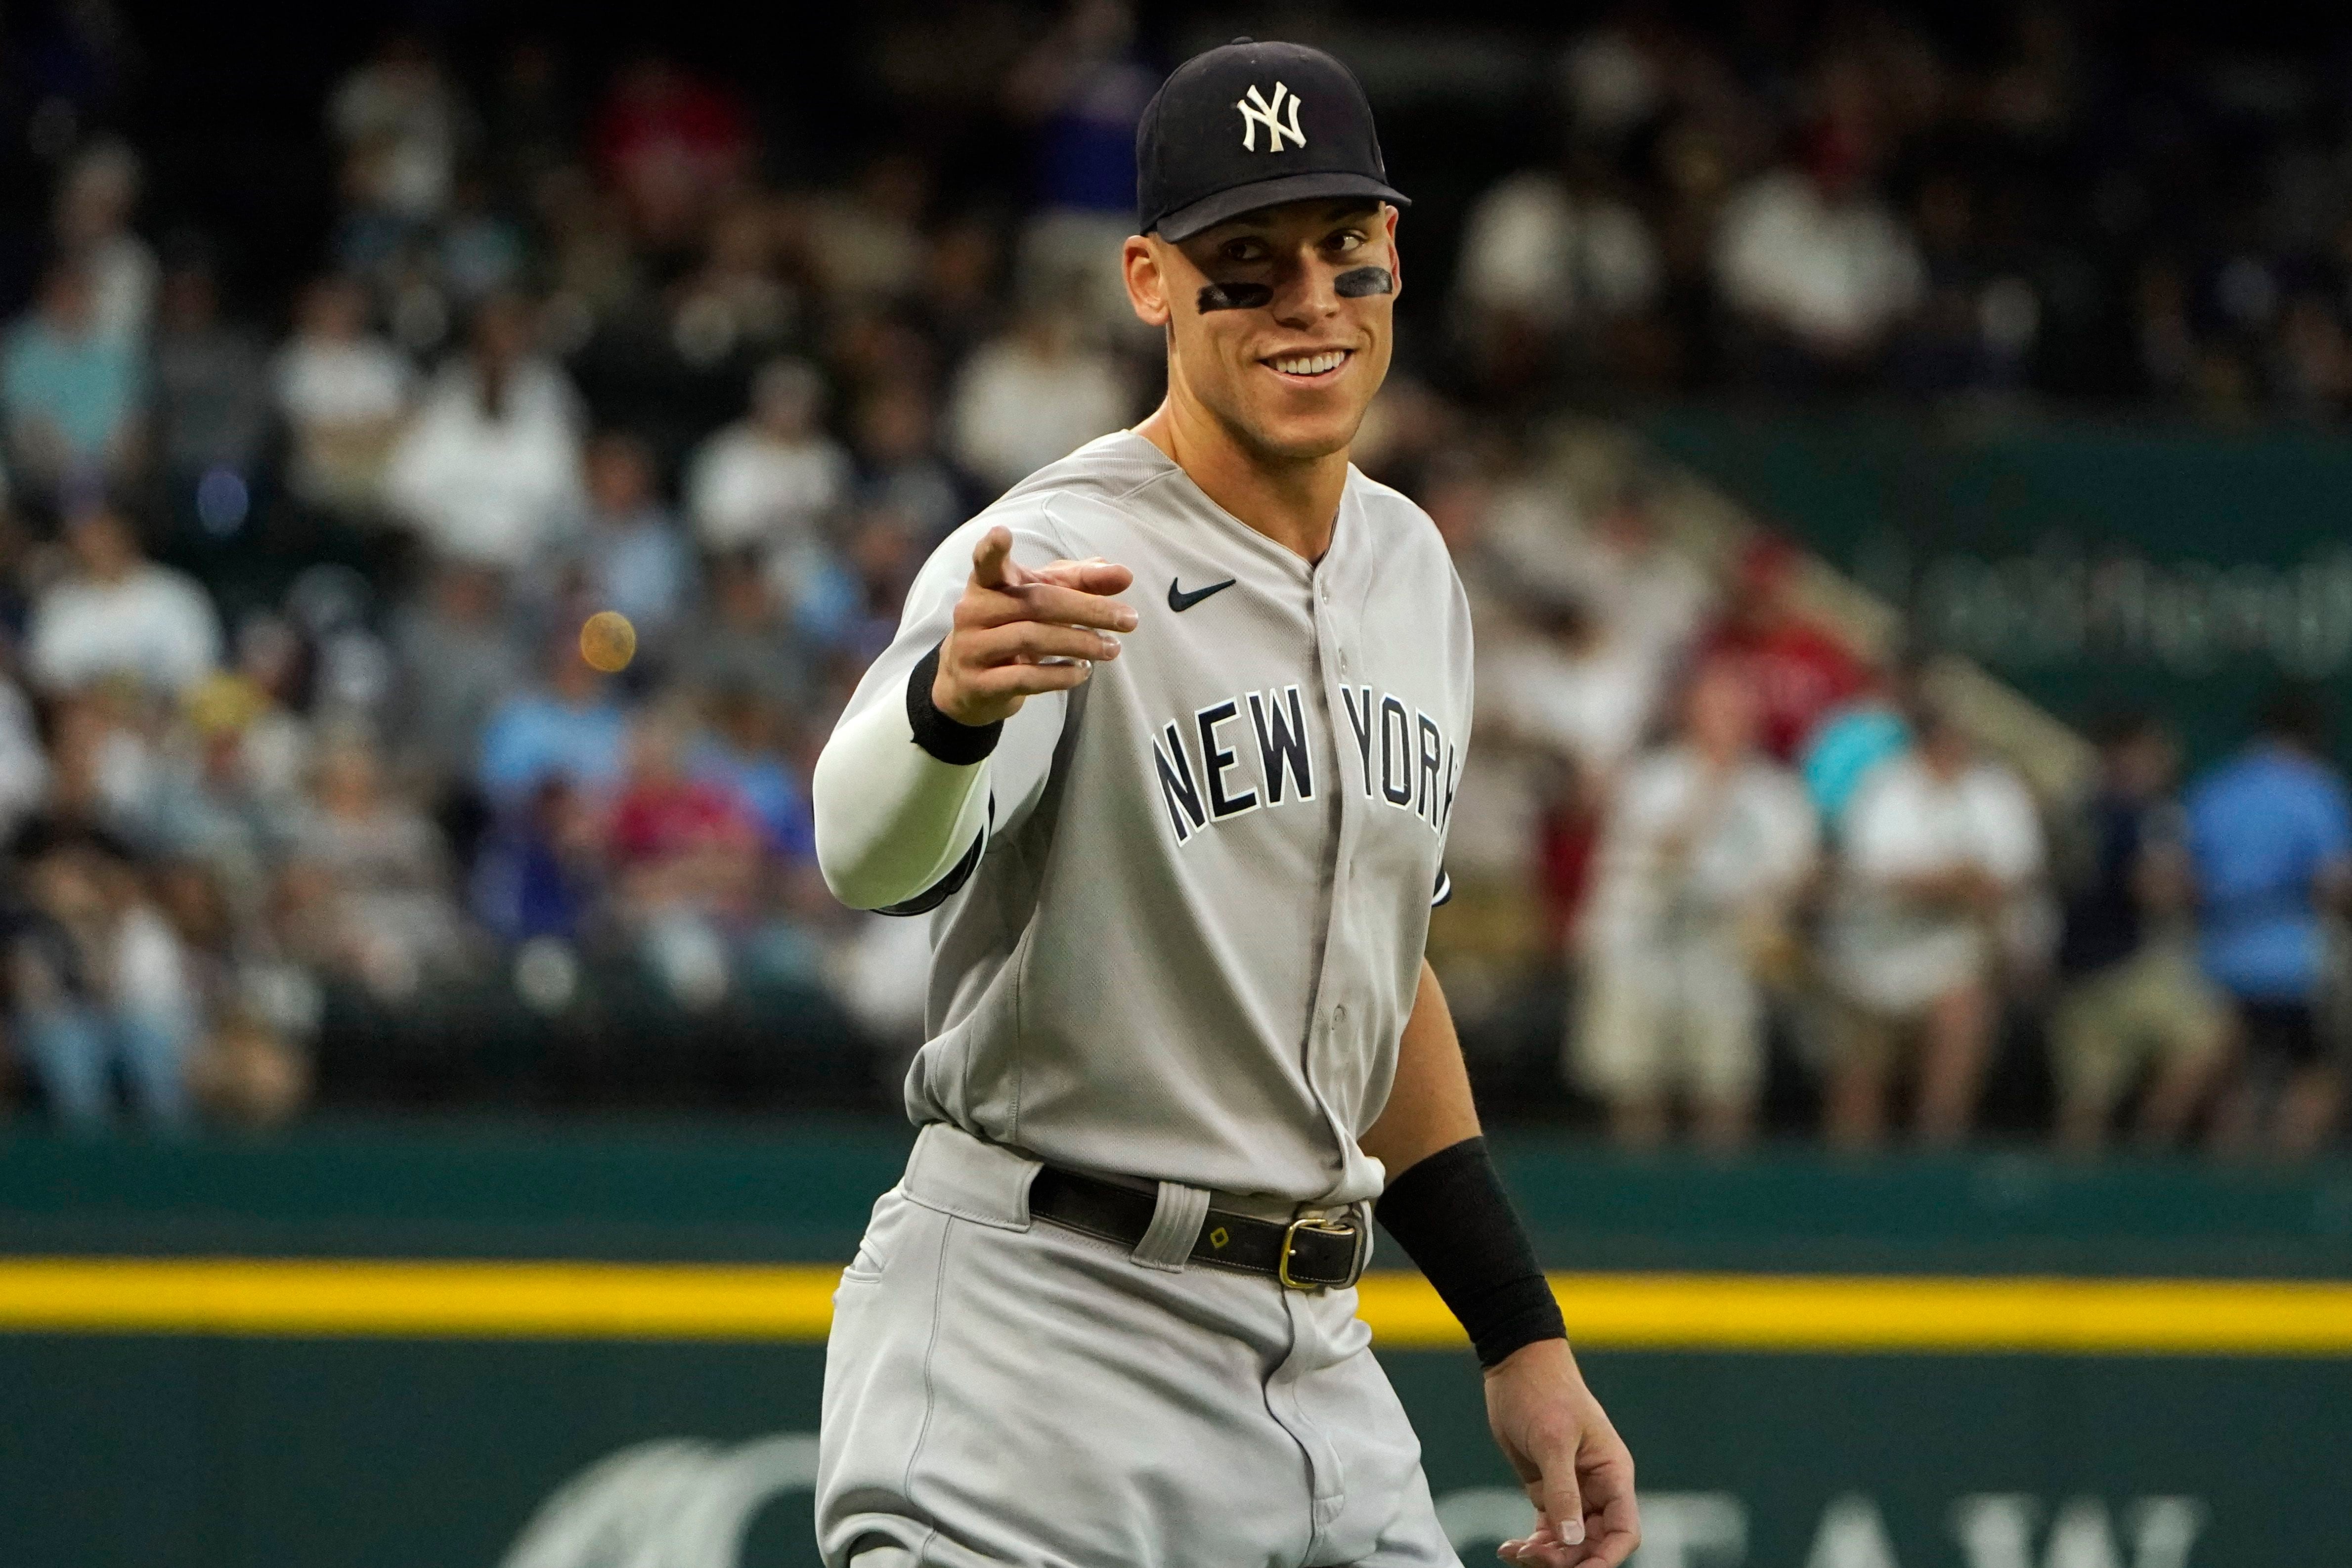 Yankees star Judge hits 61st home run, ties Maris' AL record - NBC